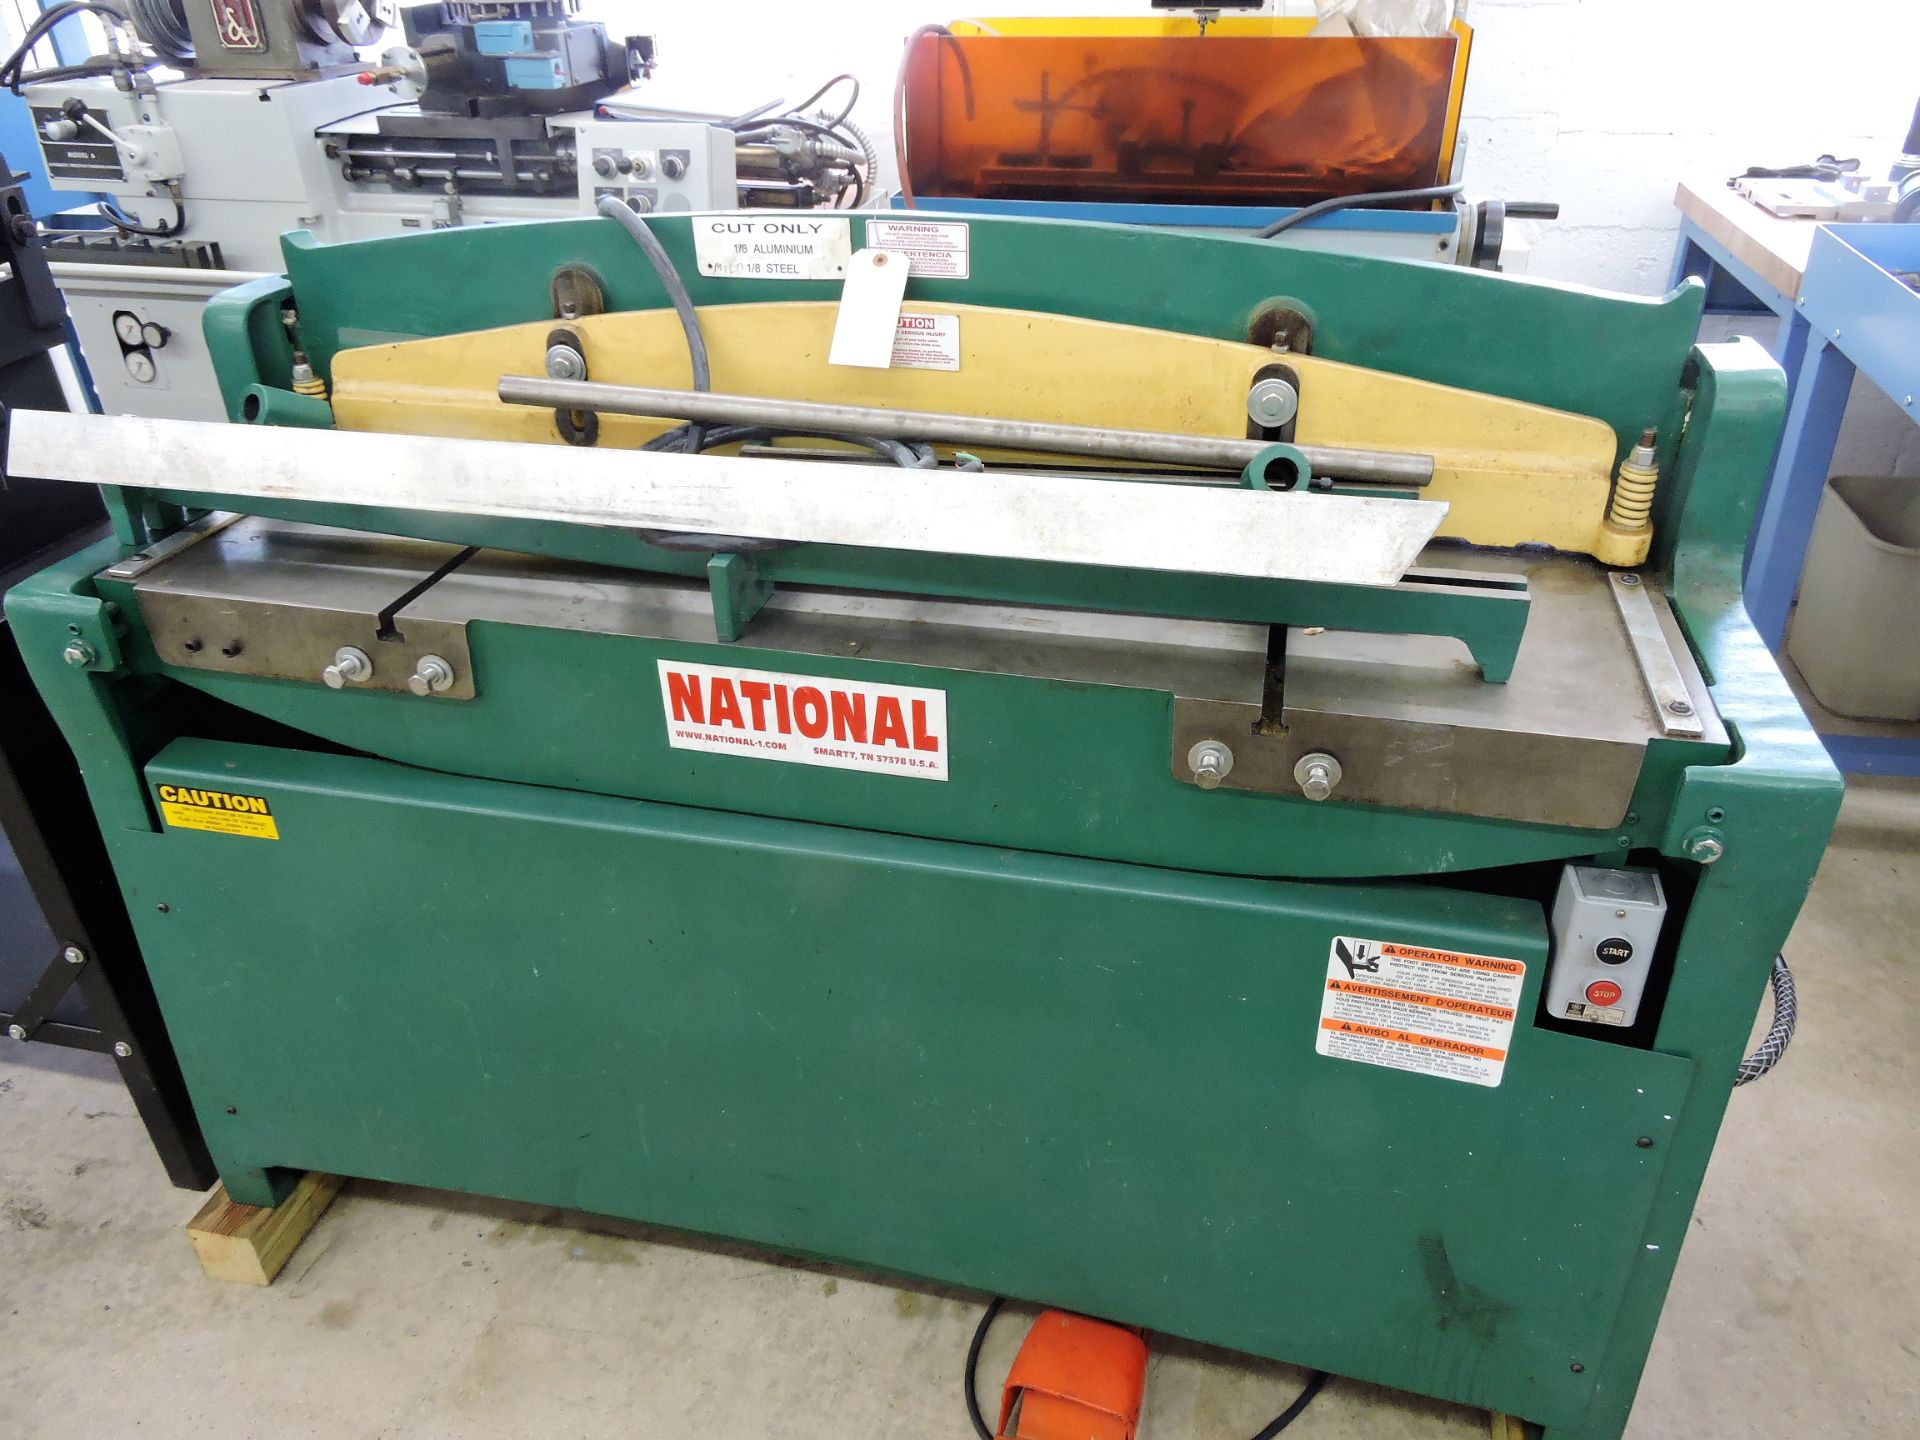 National Model NH5210 10 Gauge x 52" Hydraulic Power Shear S/n 480605 (Deerfield Beach , FL) - Image 2 of 3